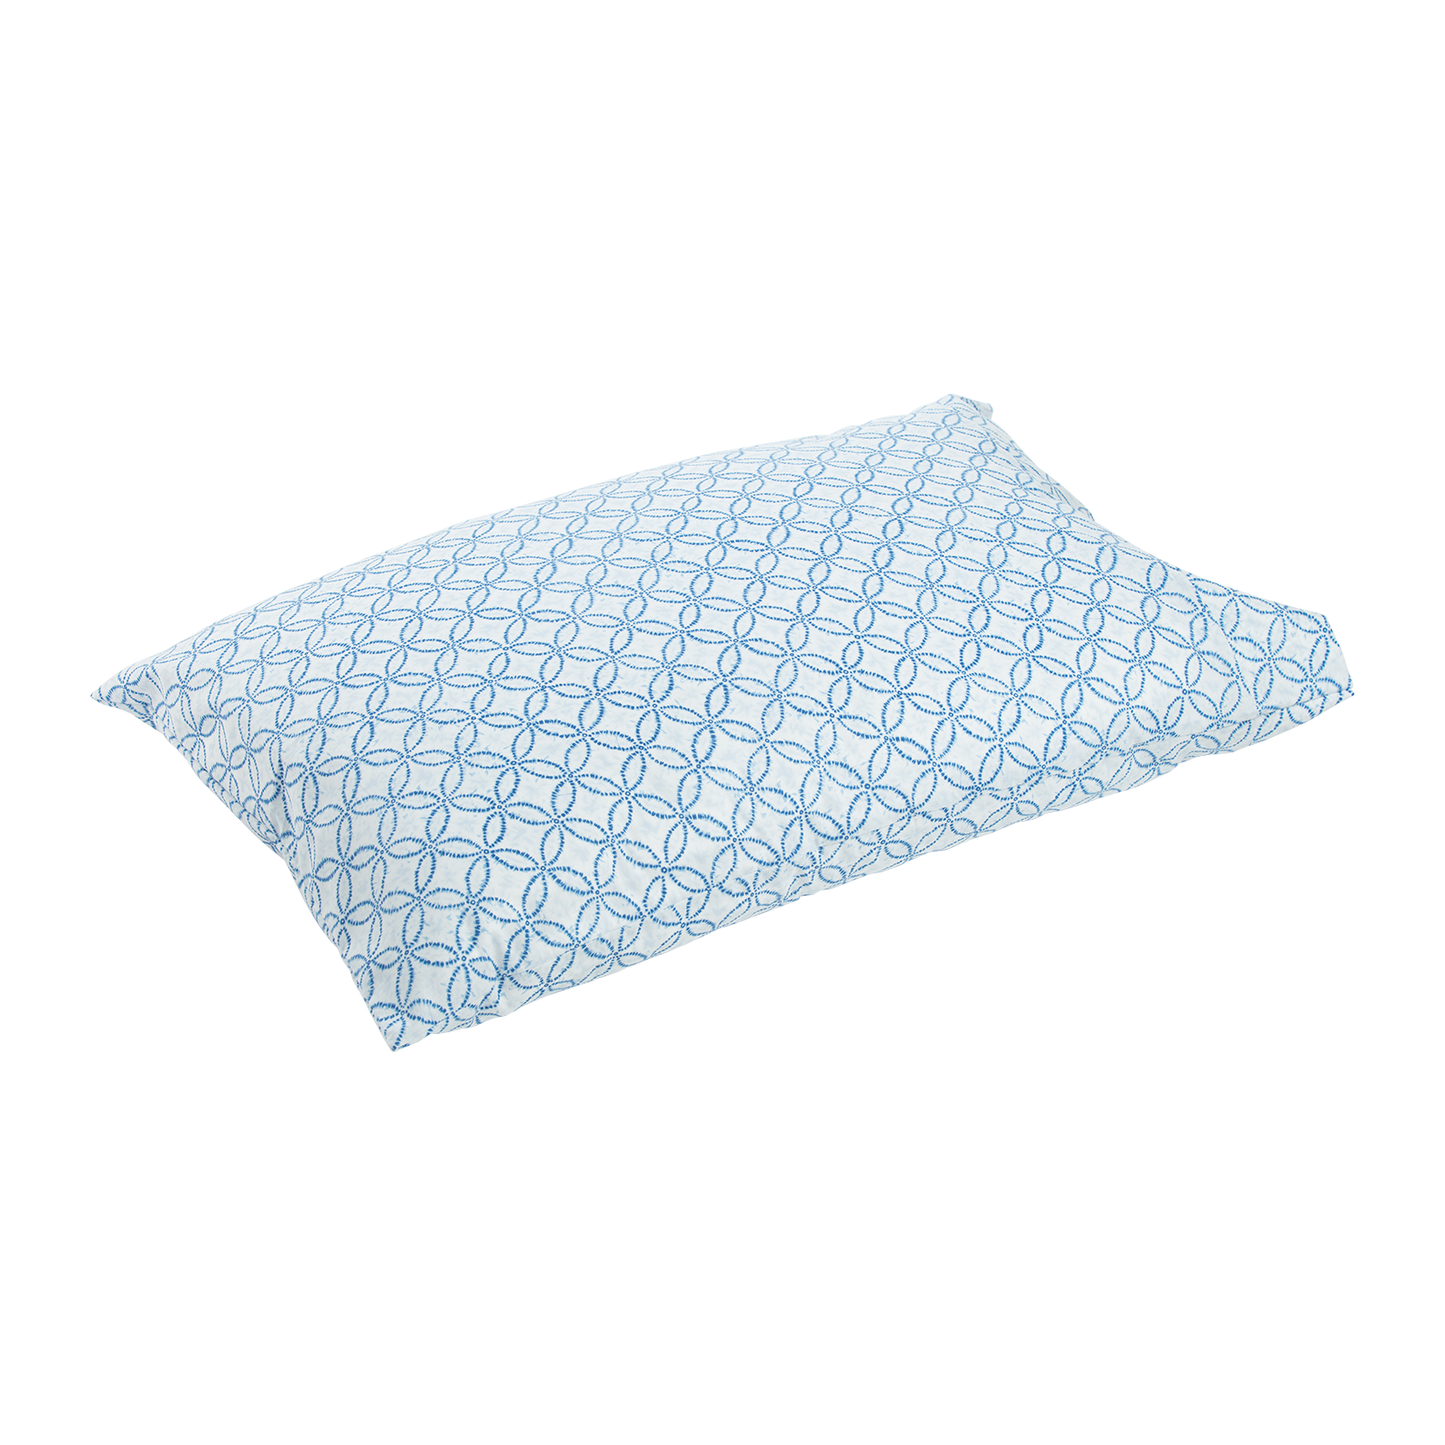 J-Life Taidai Light Blue Pillowcase_Pillows & Shams